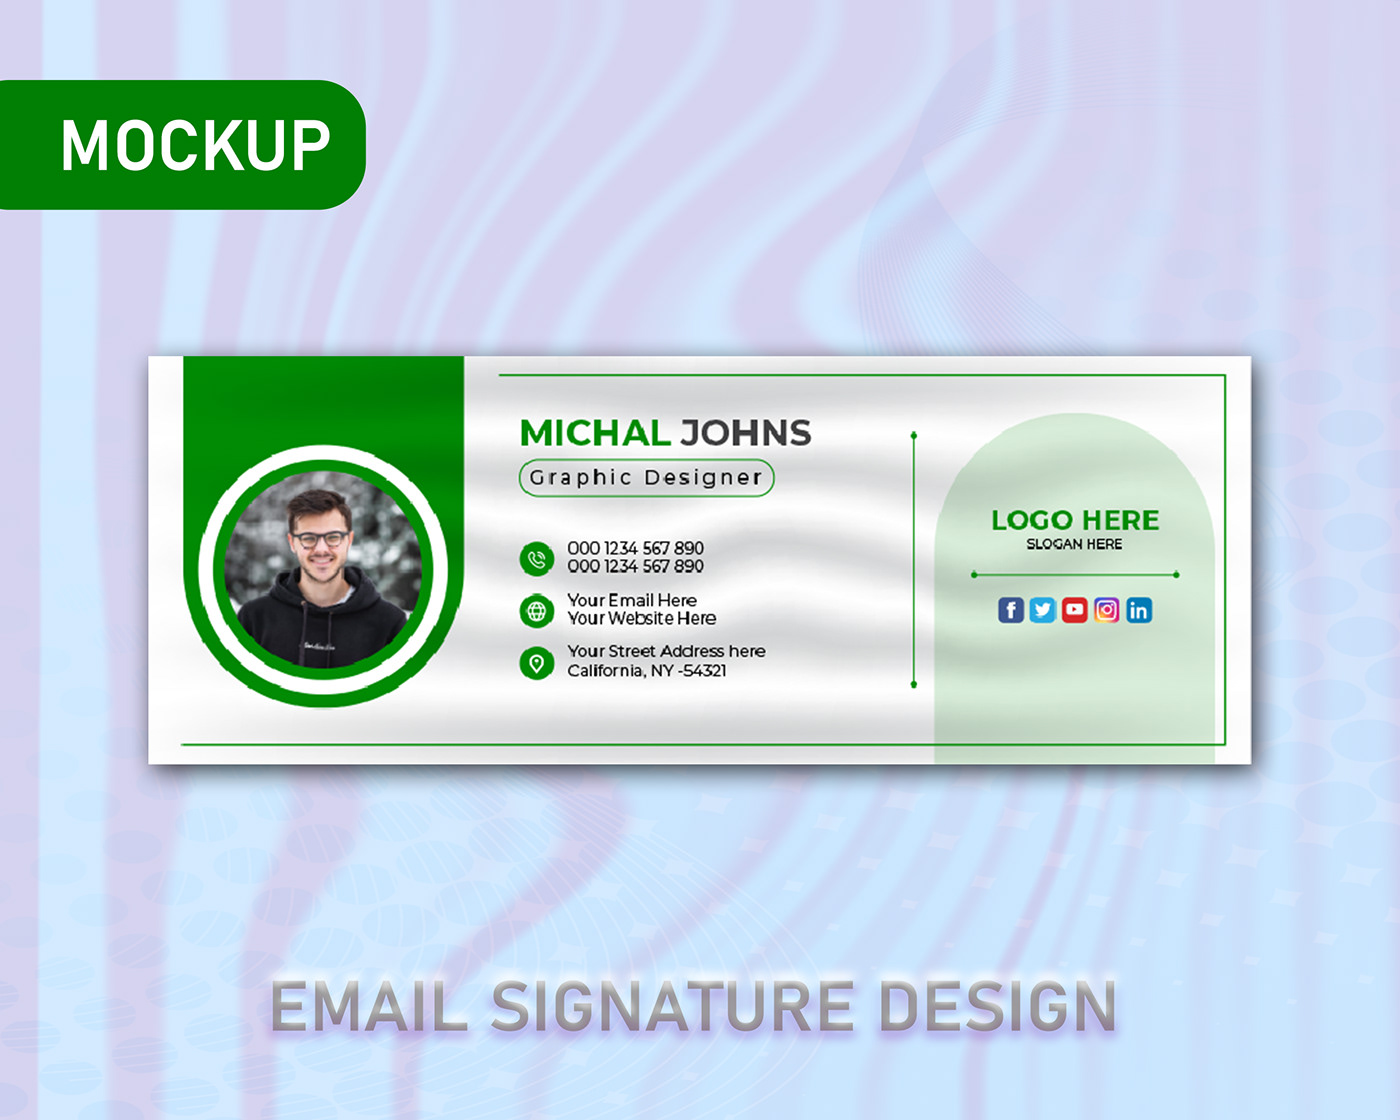 email signature email signature design Email Signature Template design marketing   Advertising  Corporate Design modern Professional Email Design